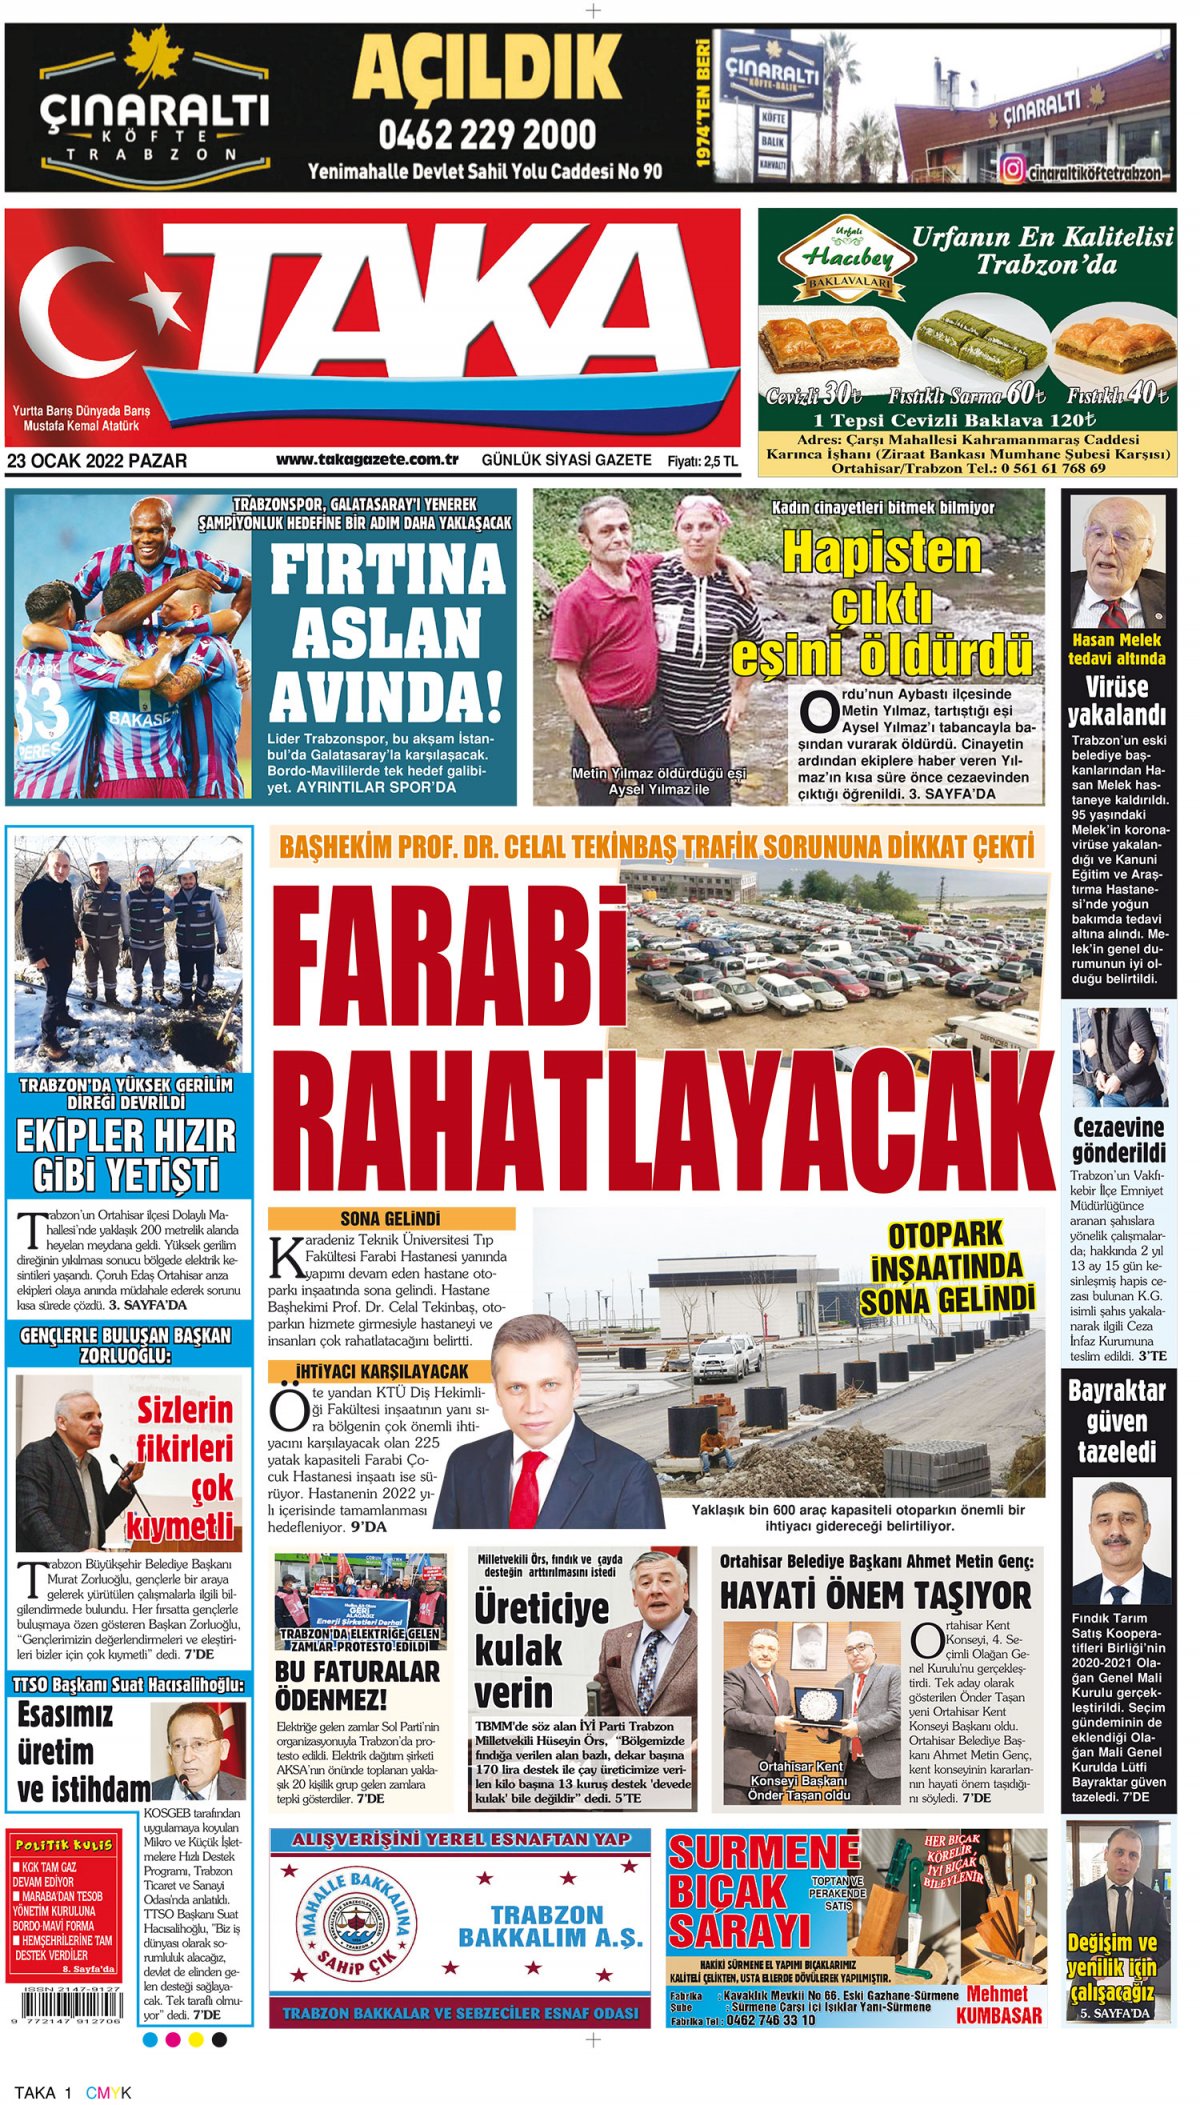 Taka Gazete - 23.01.2022 Manşeti